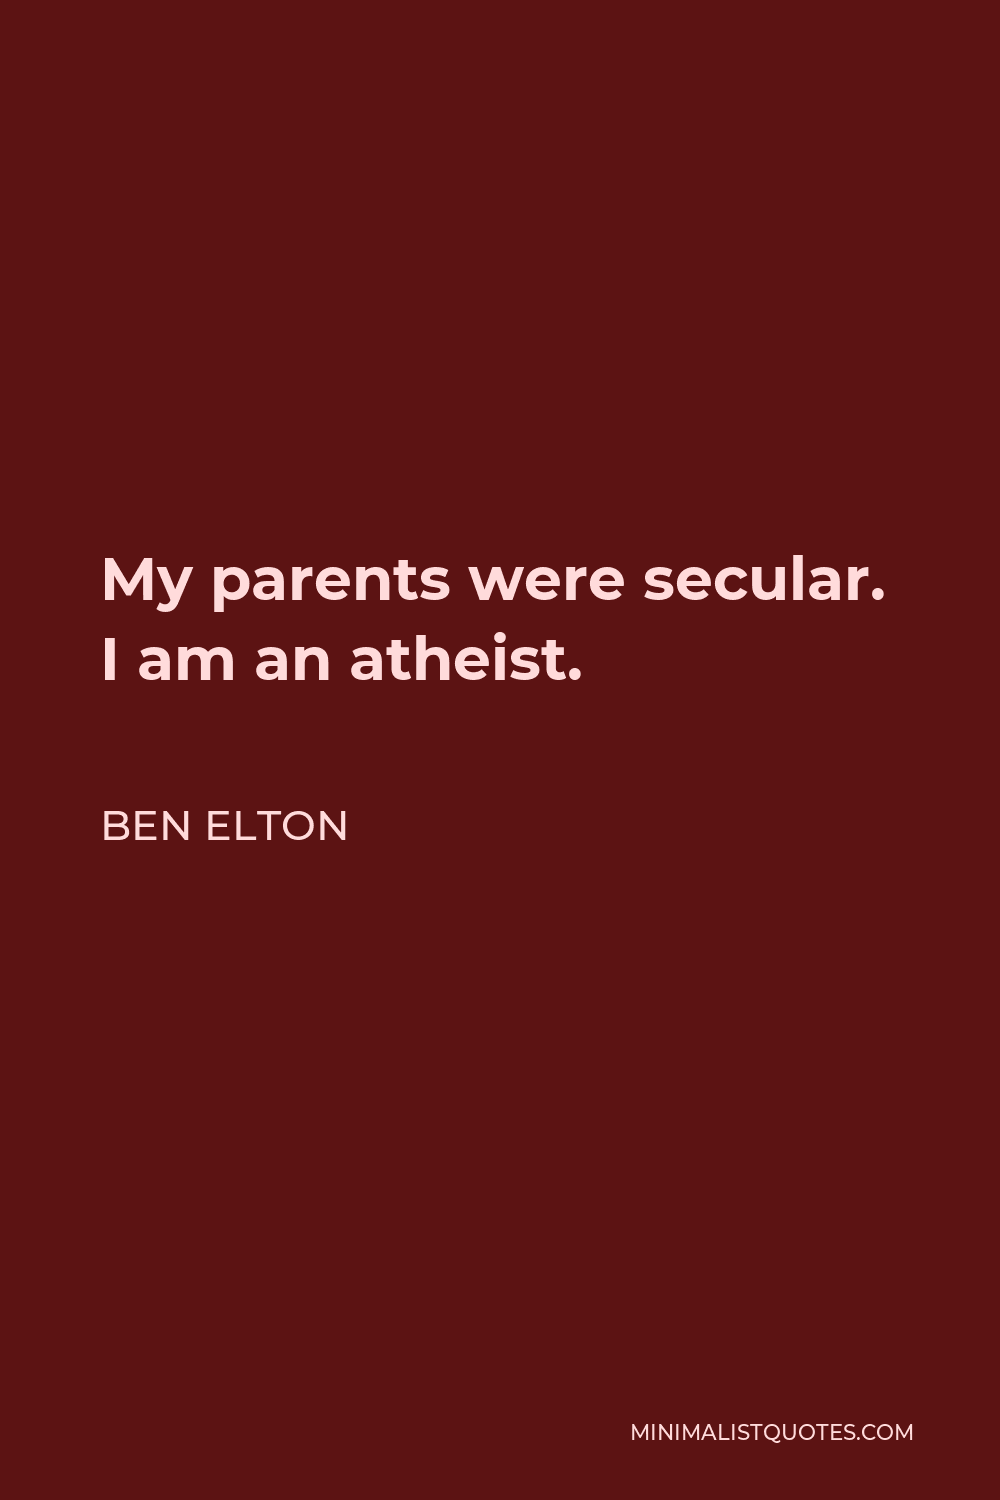 Ben Elton Quote - My parents were secular. I am an atheist.